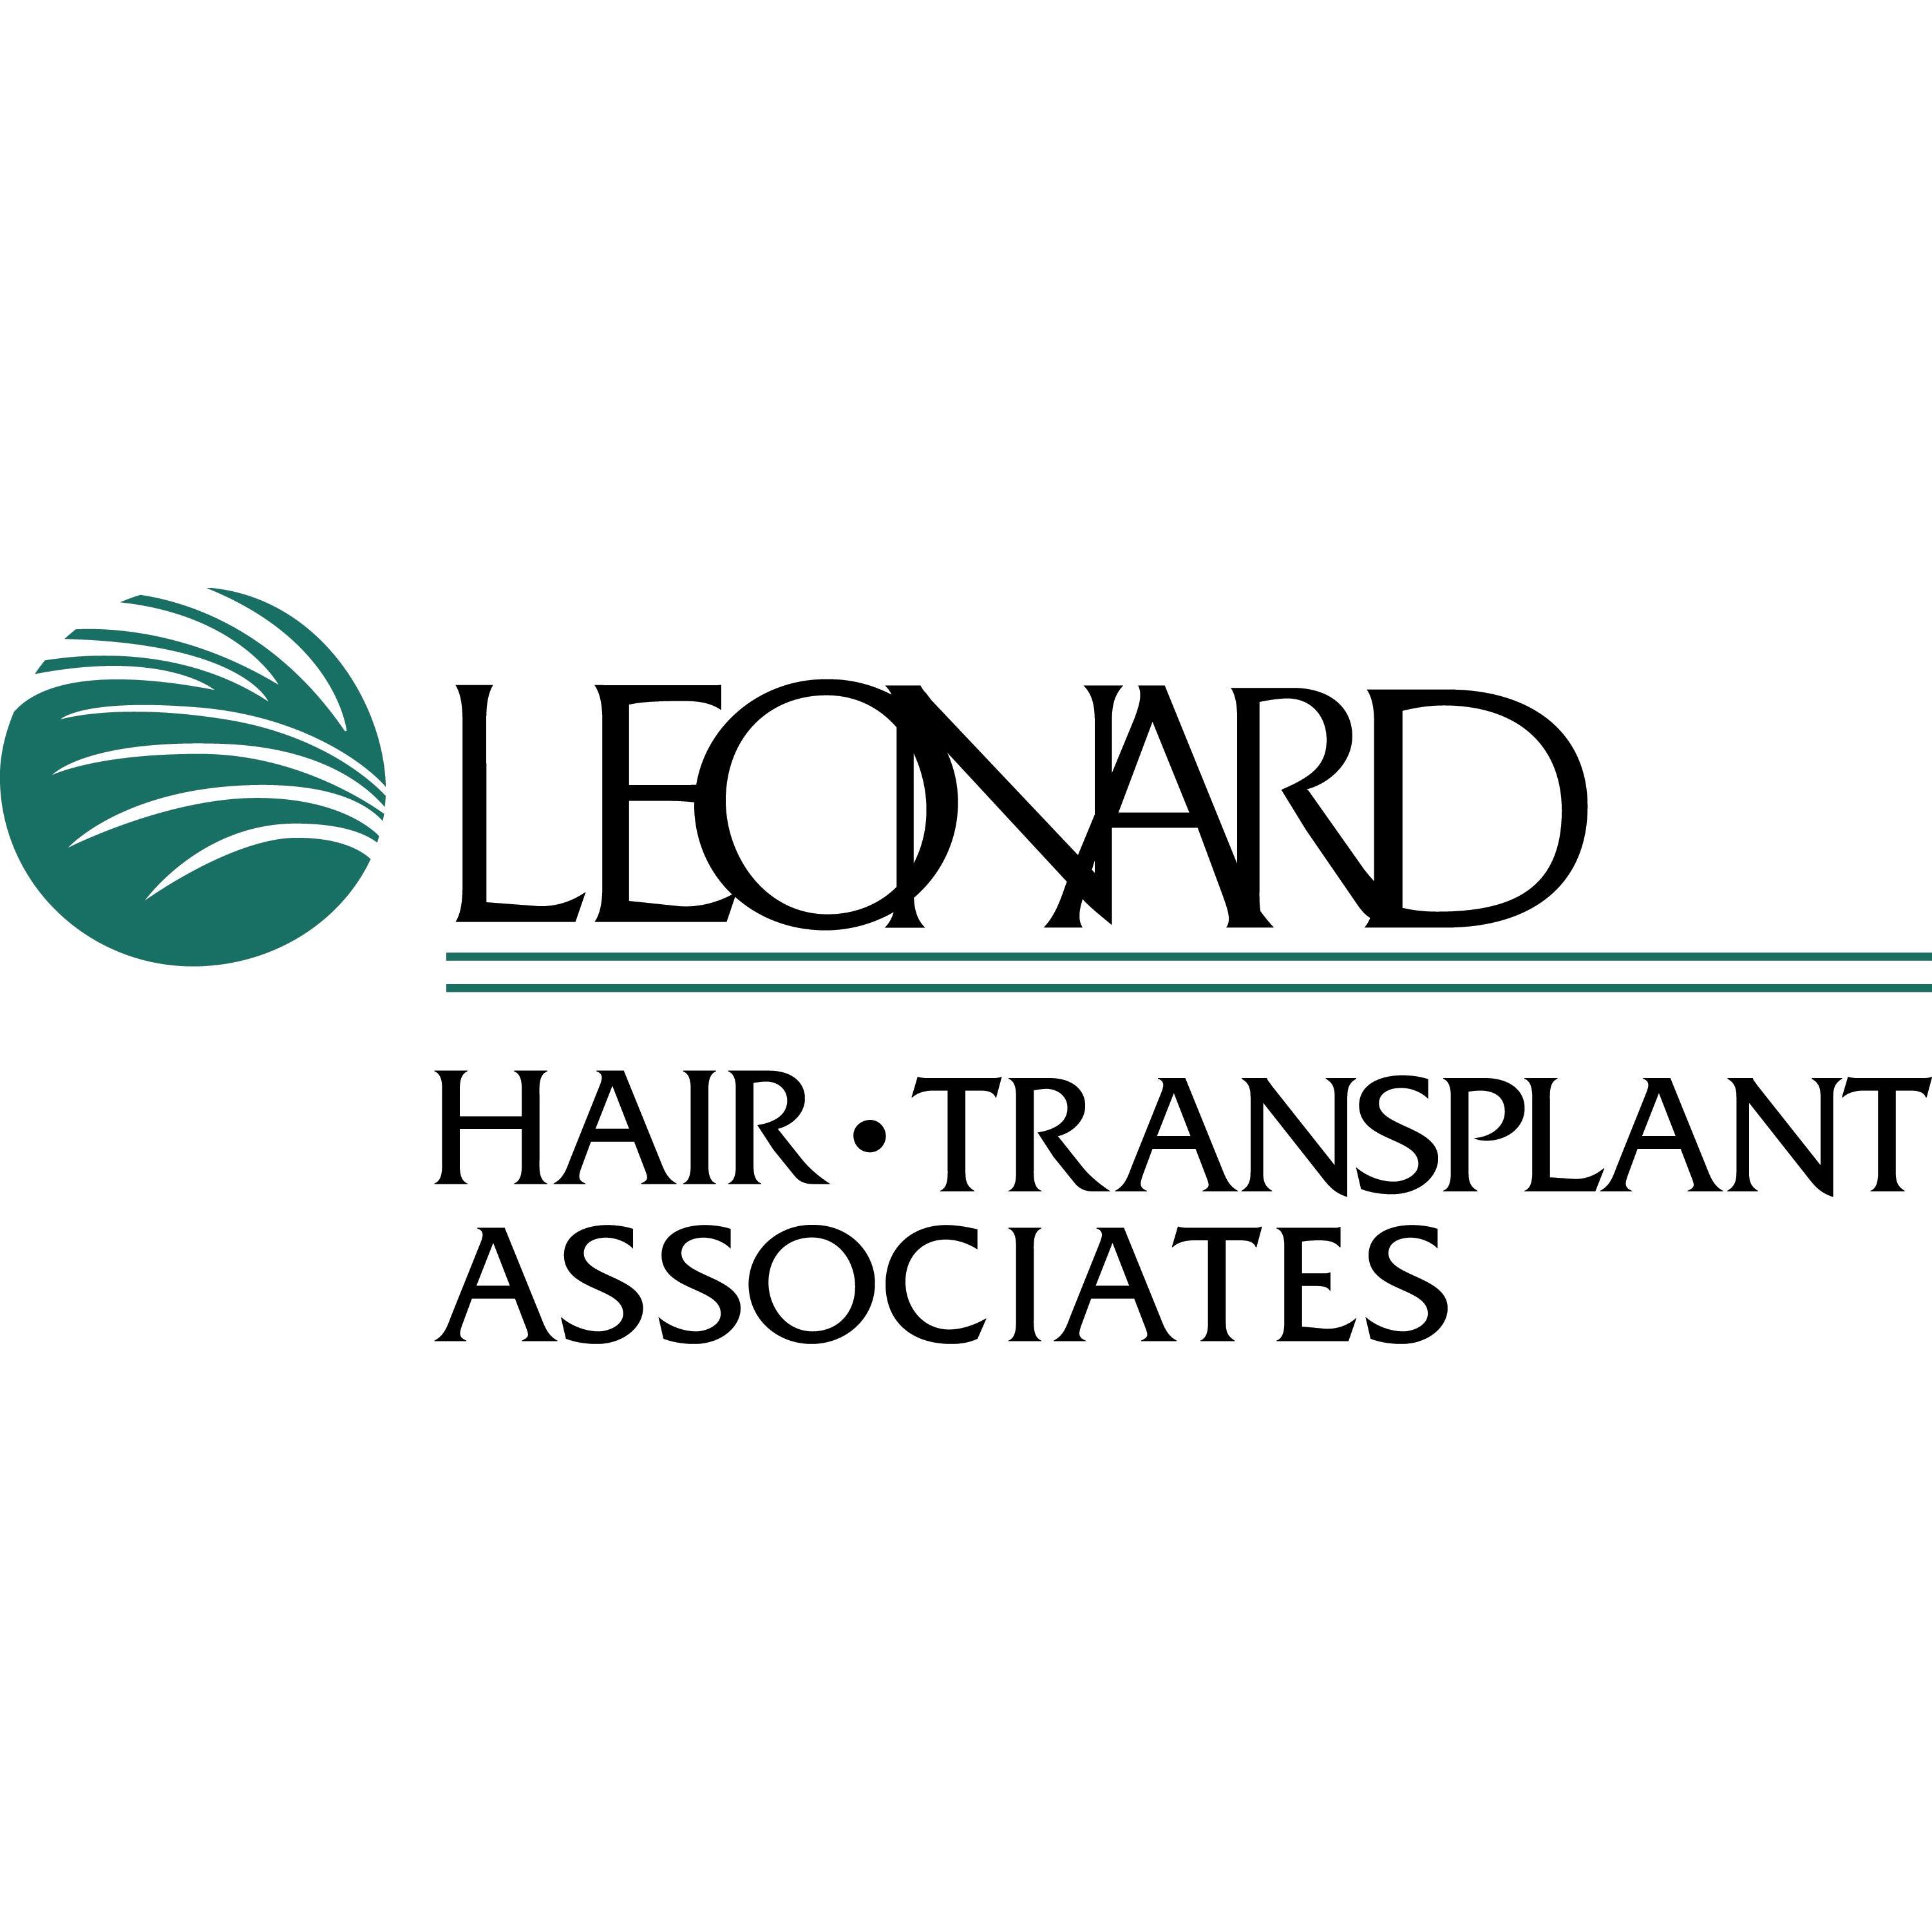 Leonard Hair Transplant Associates Reviews | Top Rated Local®